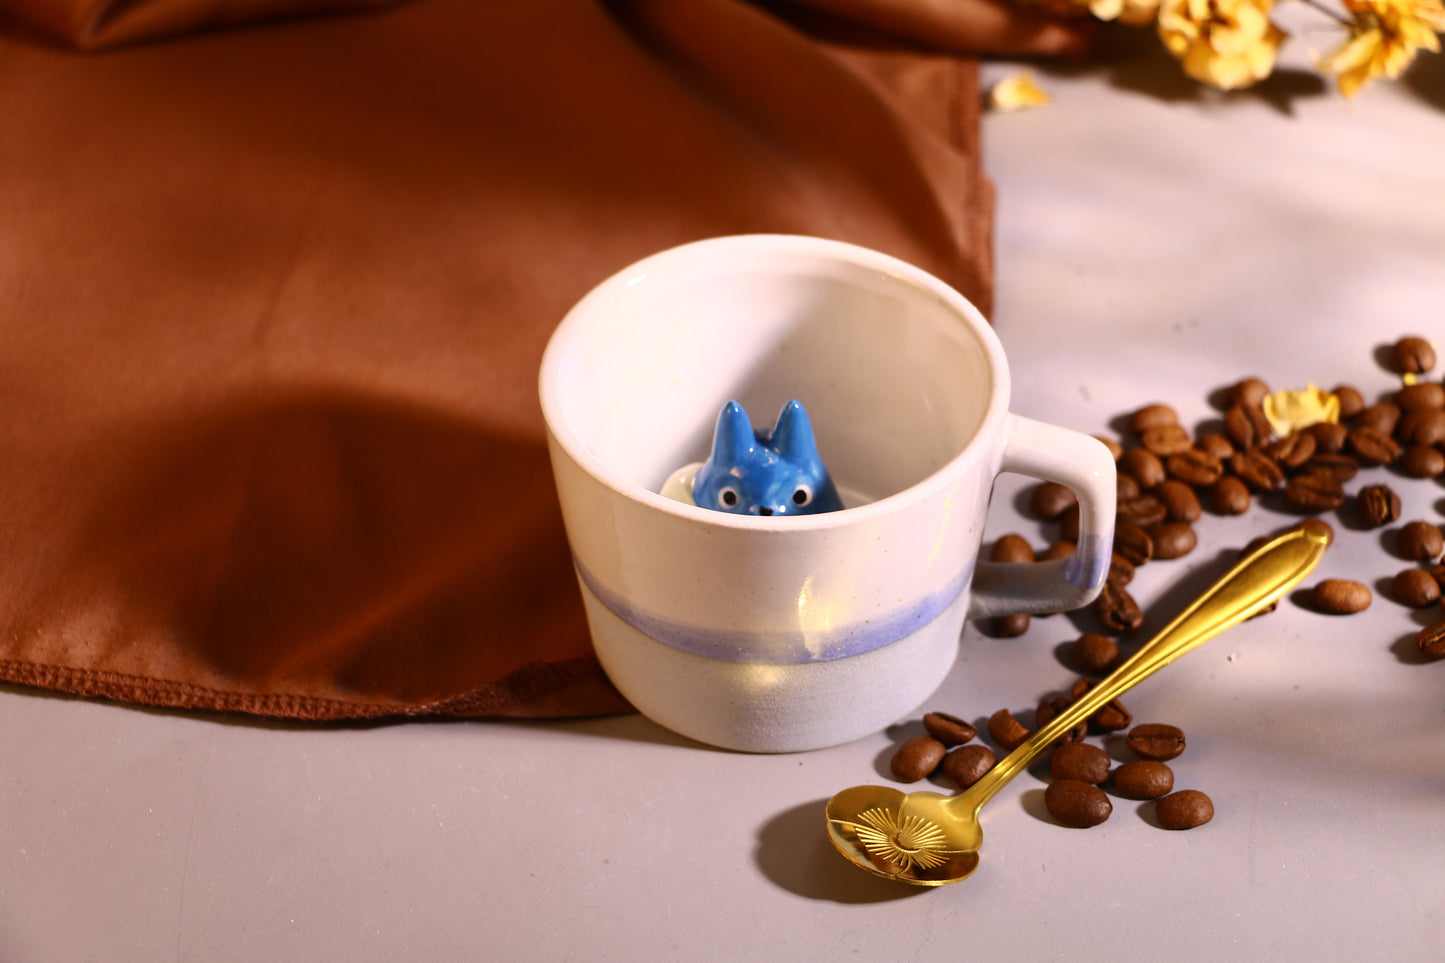 My Neighbor Totoro Handmade Anime Ceramic Mug, Character Inside Mug for Gifts